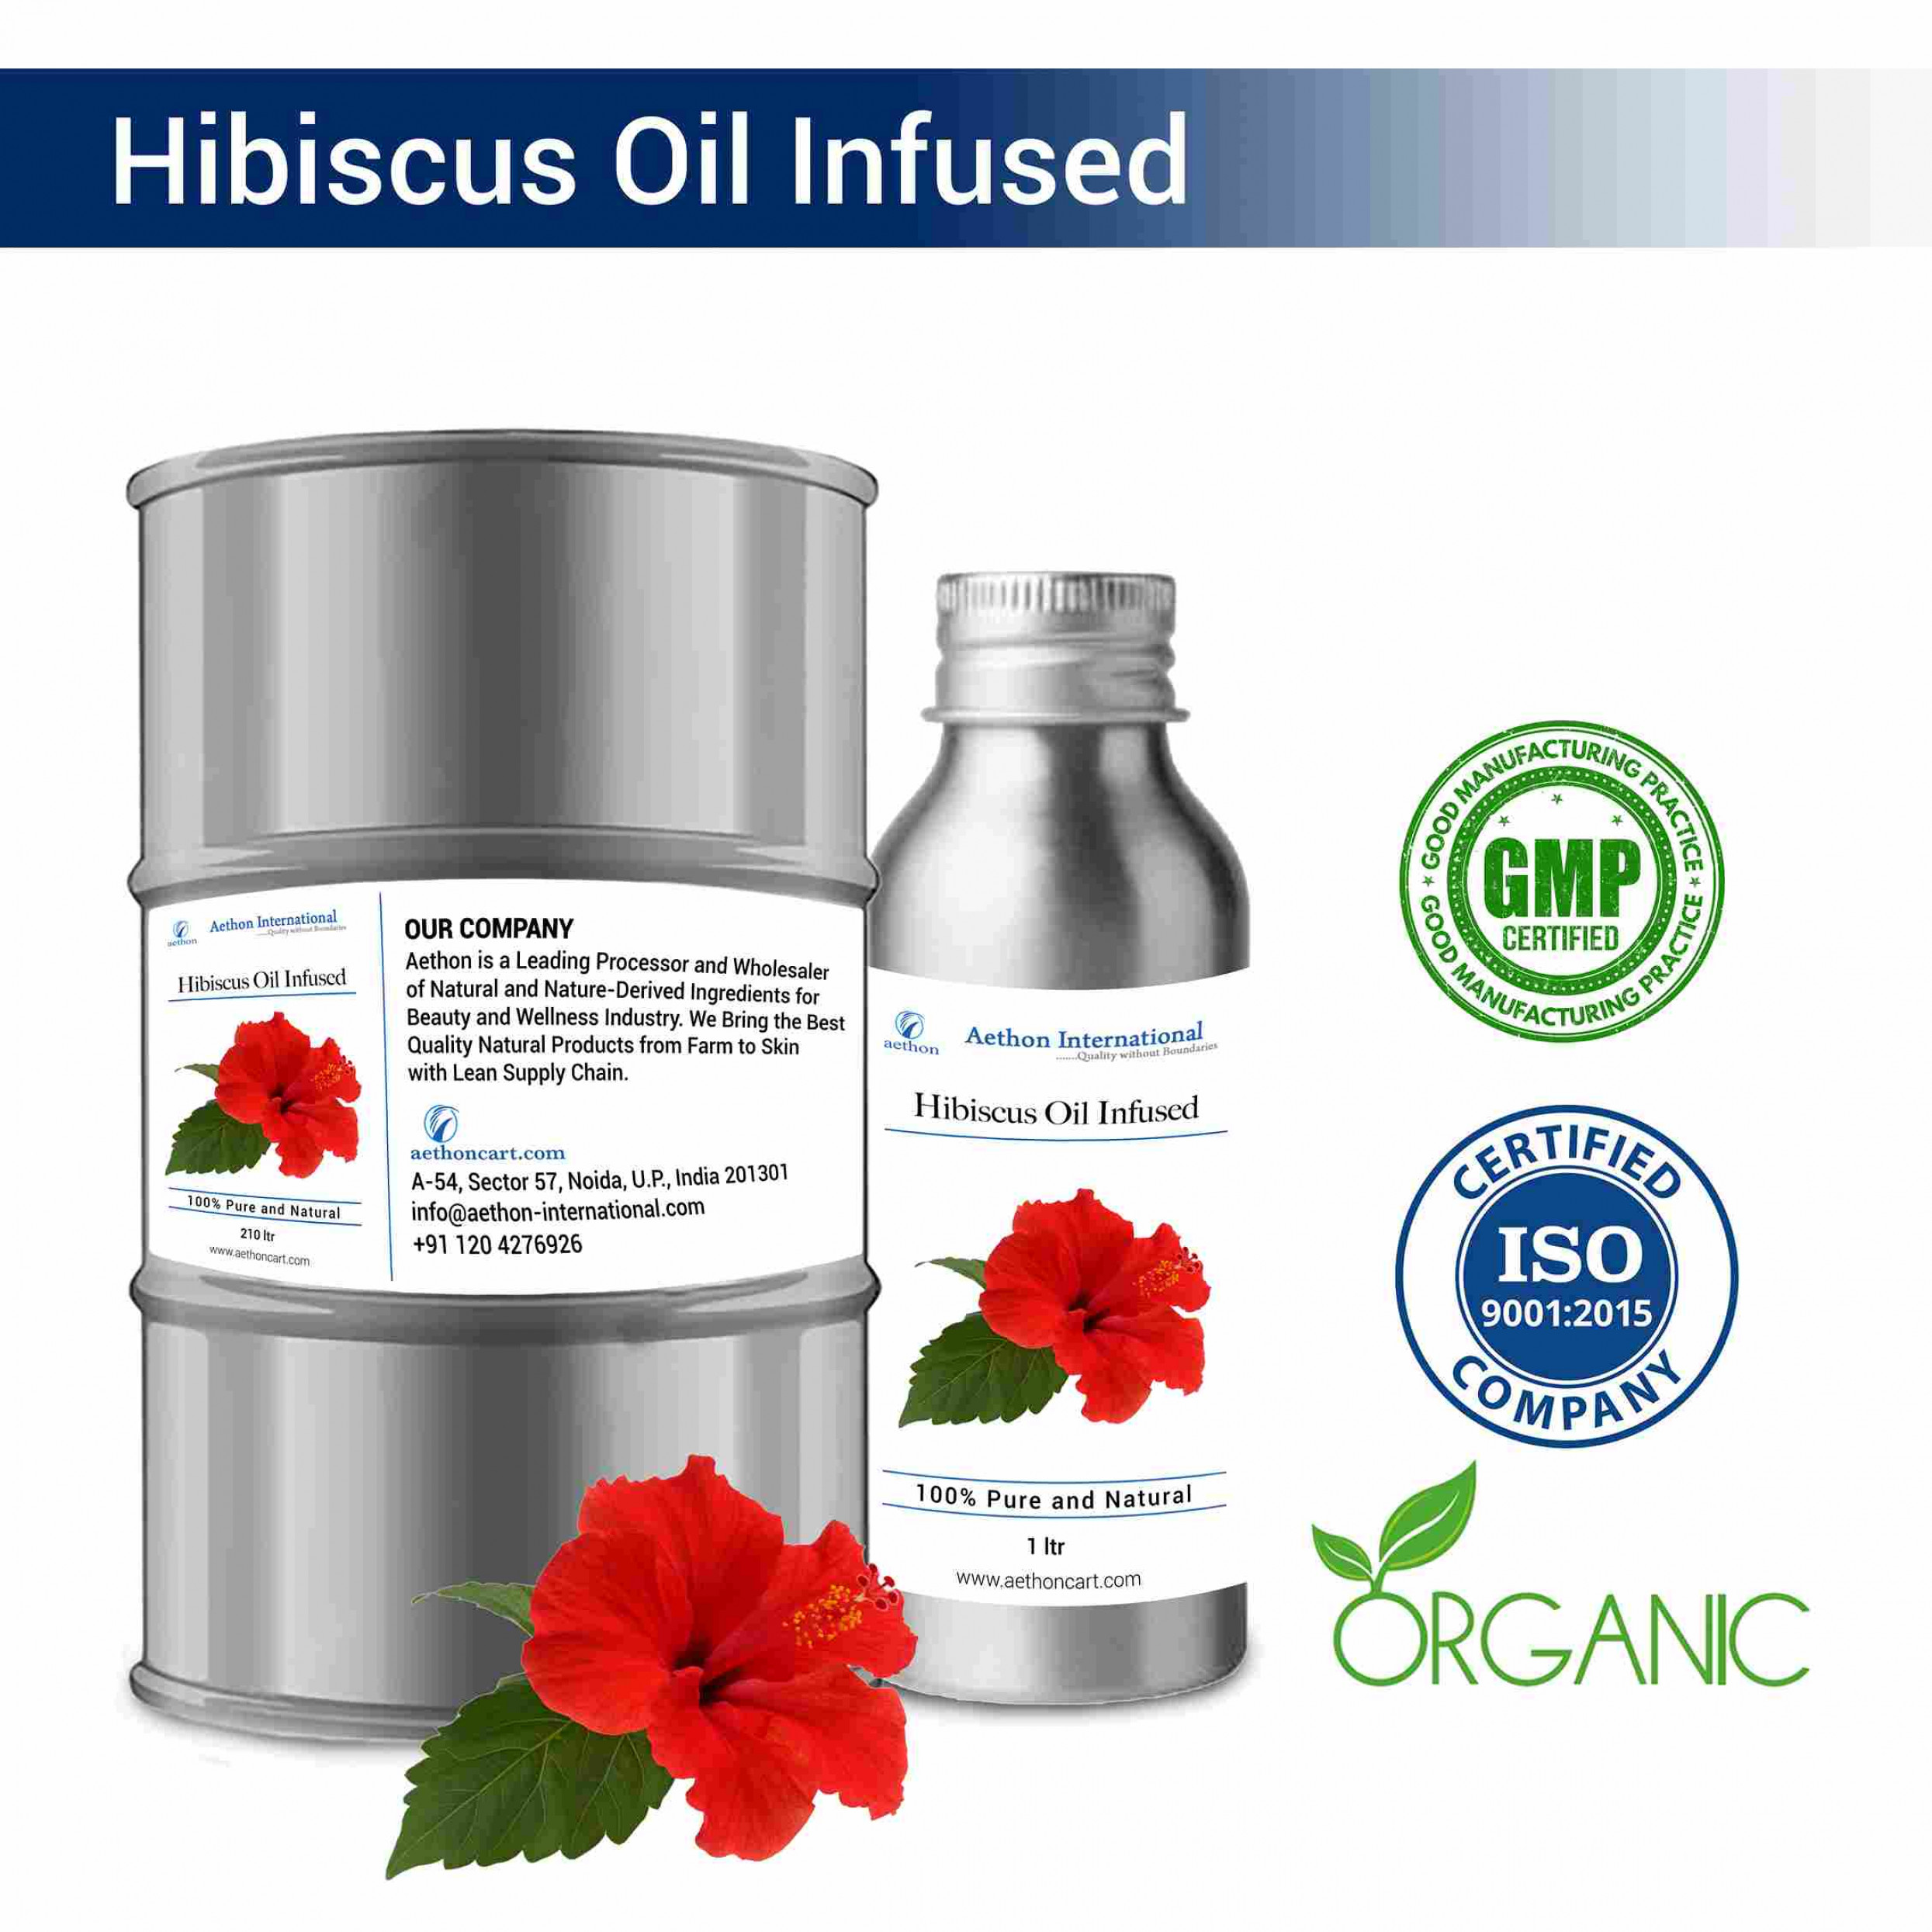 Hibiscus Oil Infused